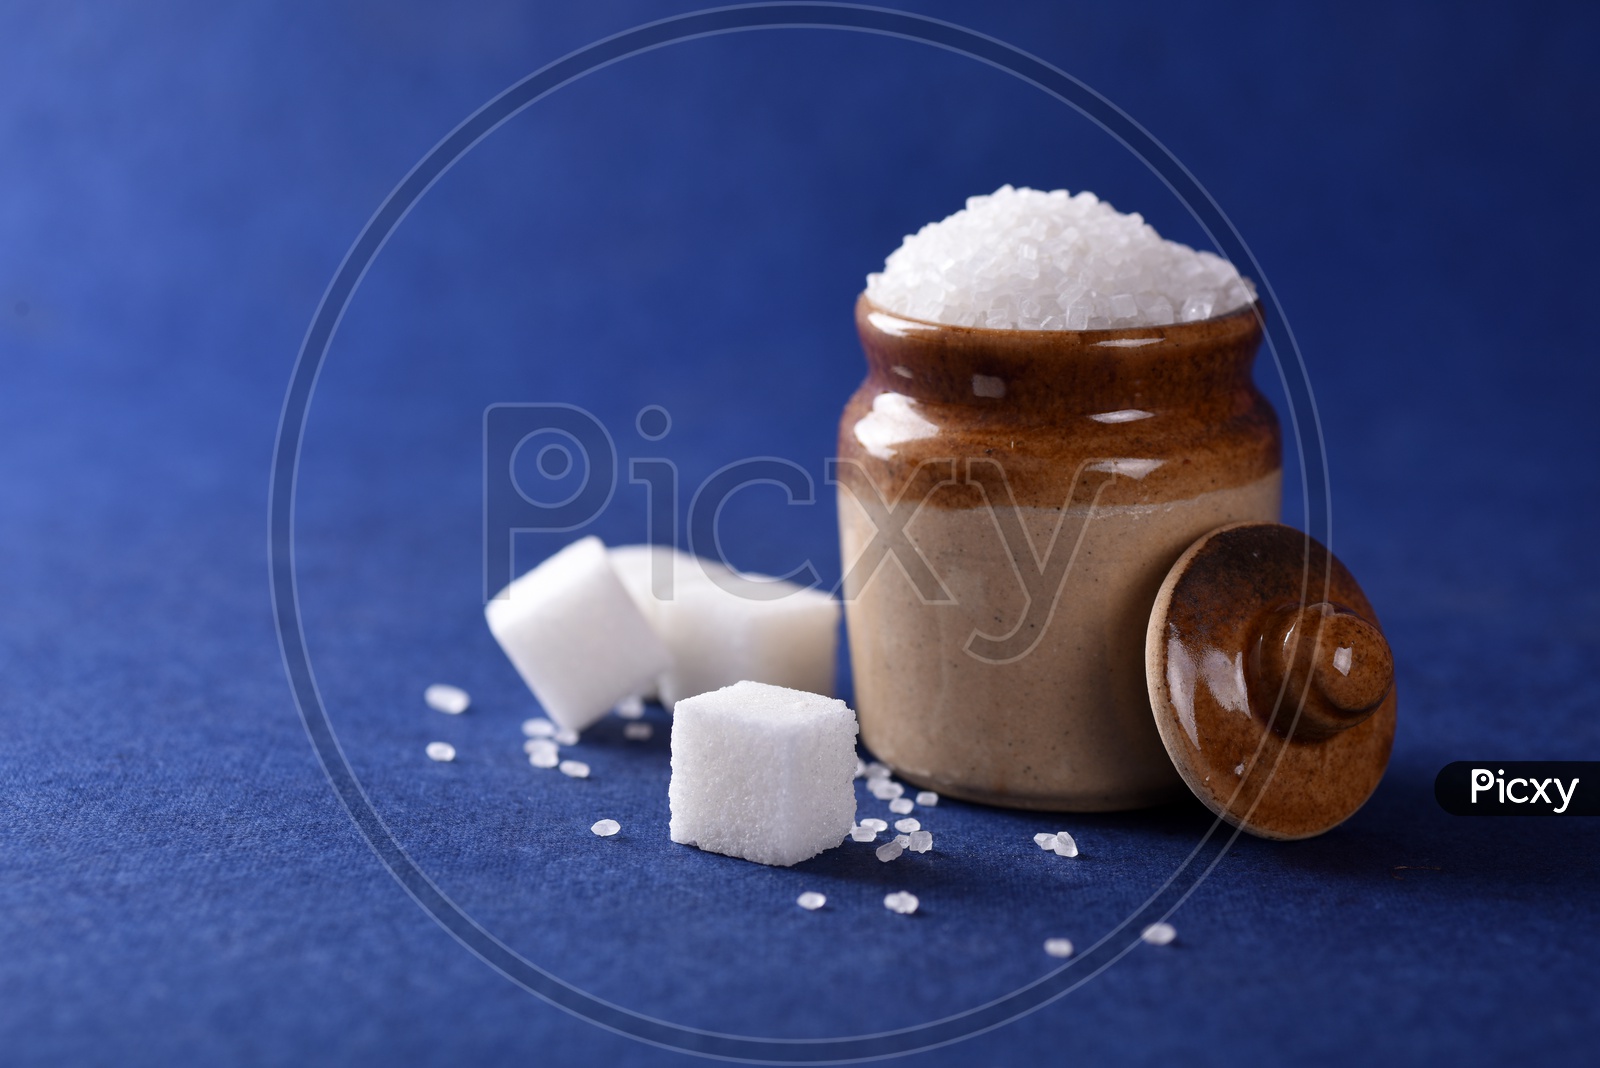 Sugar cubes and granulated sugar in a ceramic jar on blue background